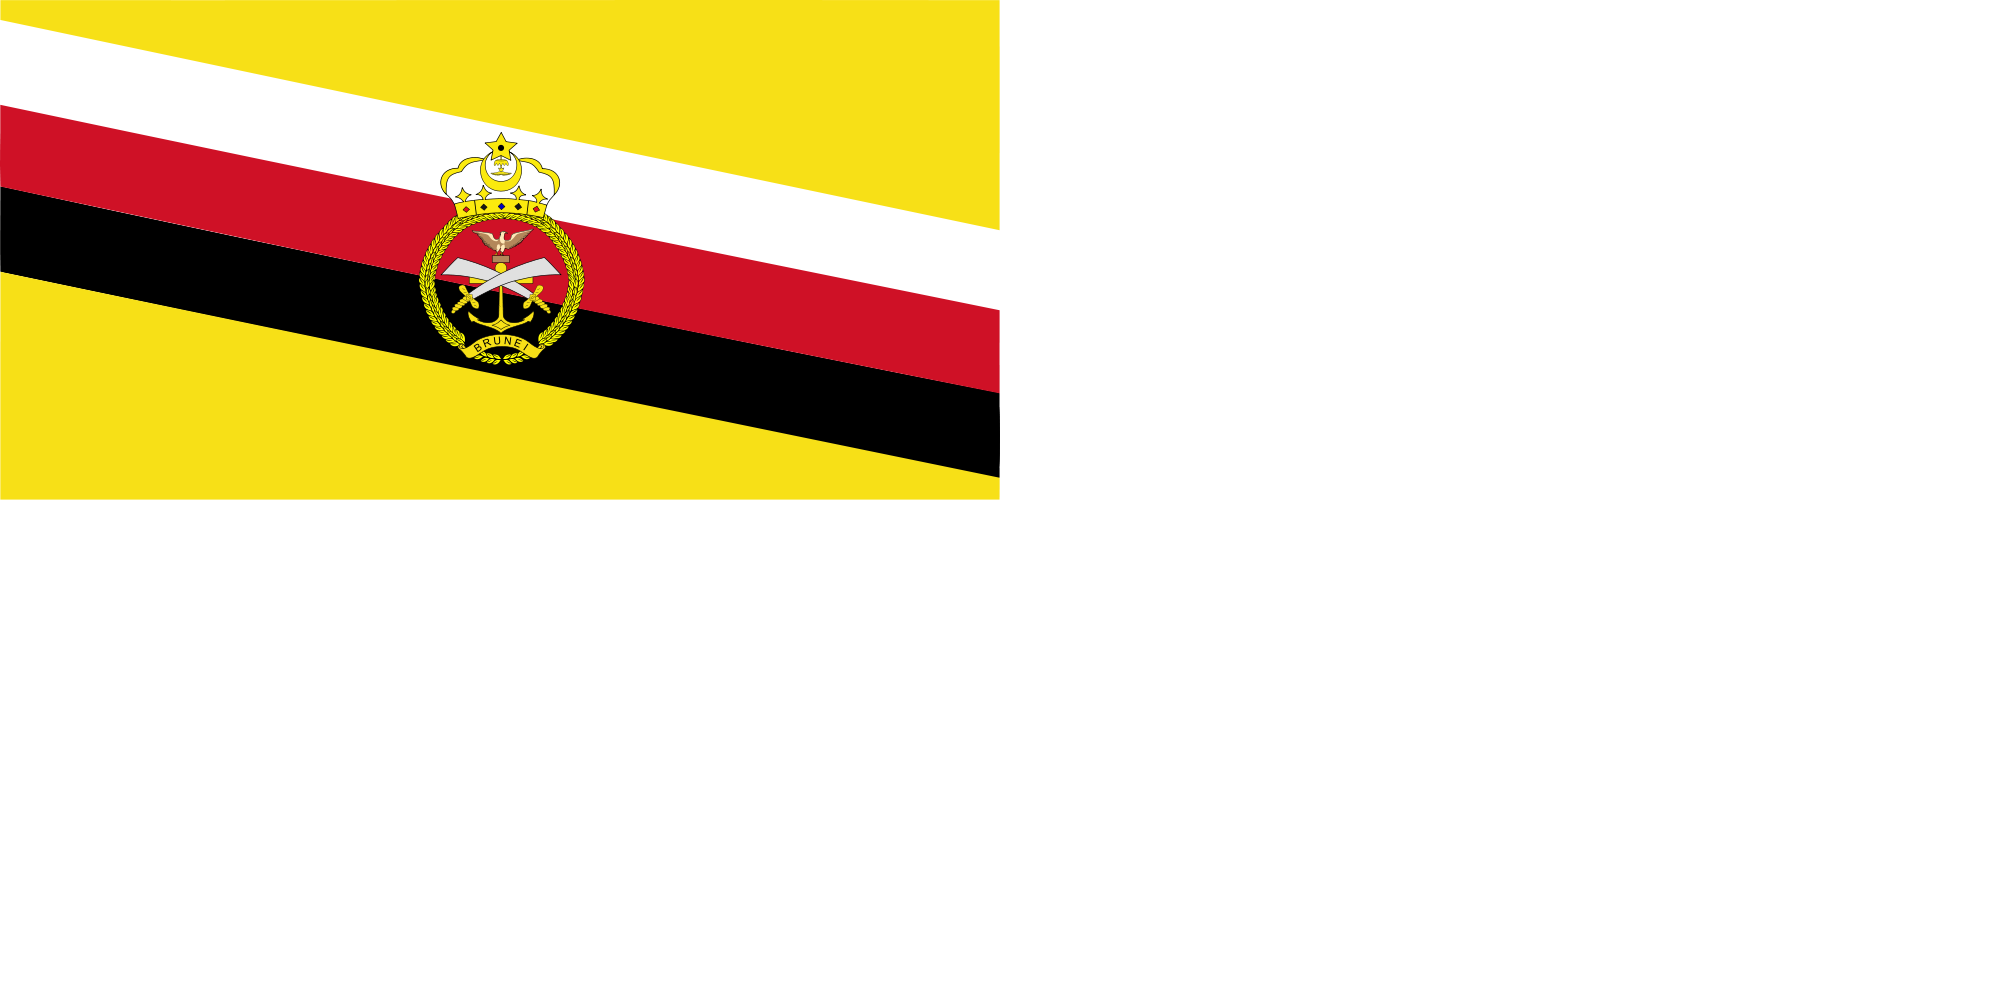 Brunei (Naval ensign)